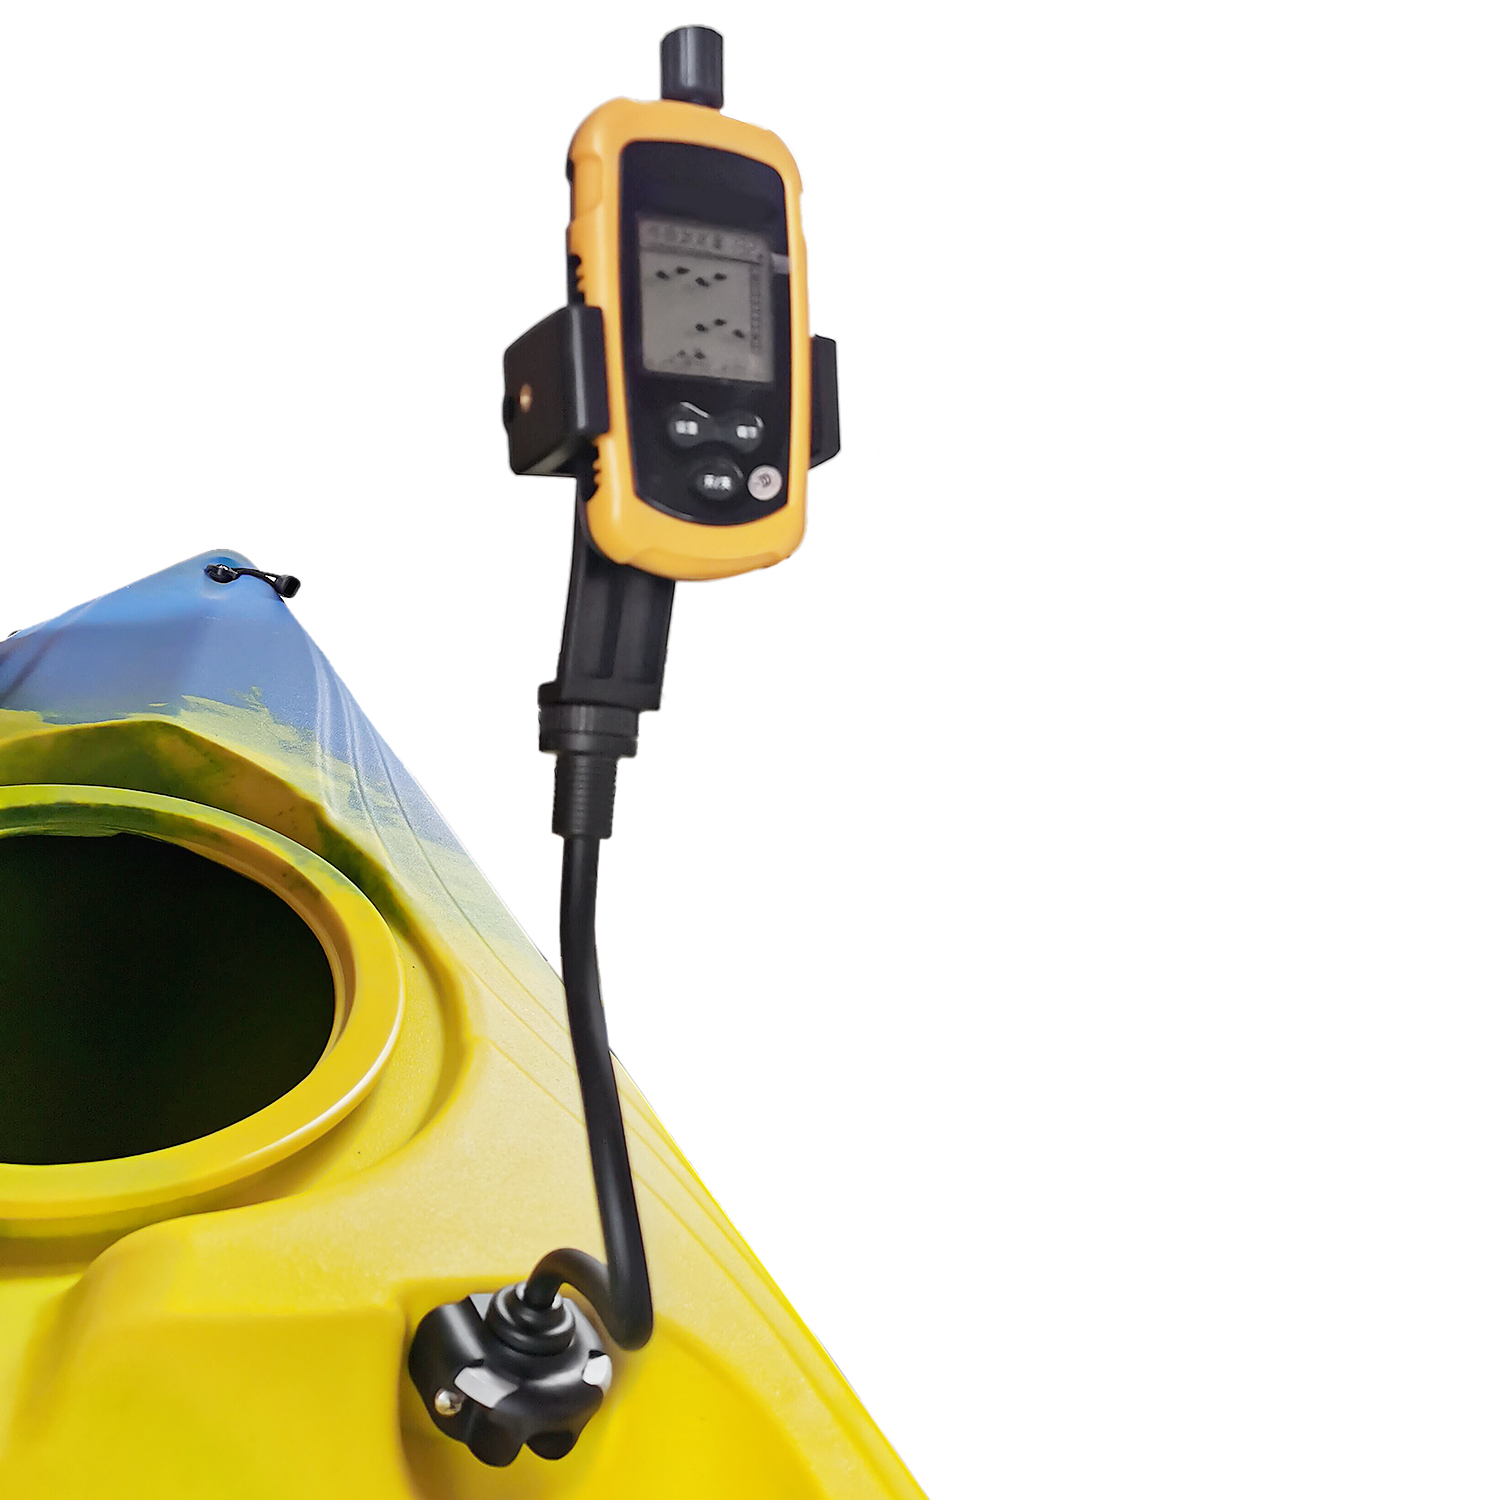 Kayak Phone Mount Universal Boat Bracket Canoe Camera Mount Holder with Flexible Long Arm Kayak Accessories